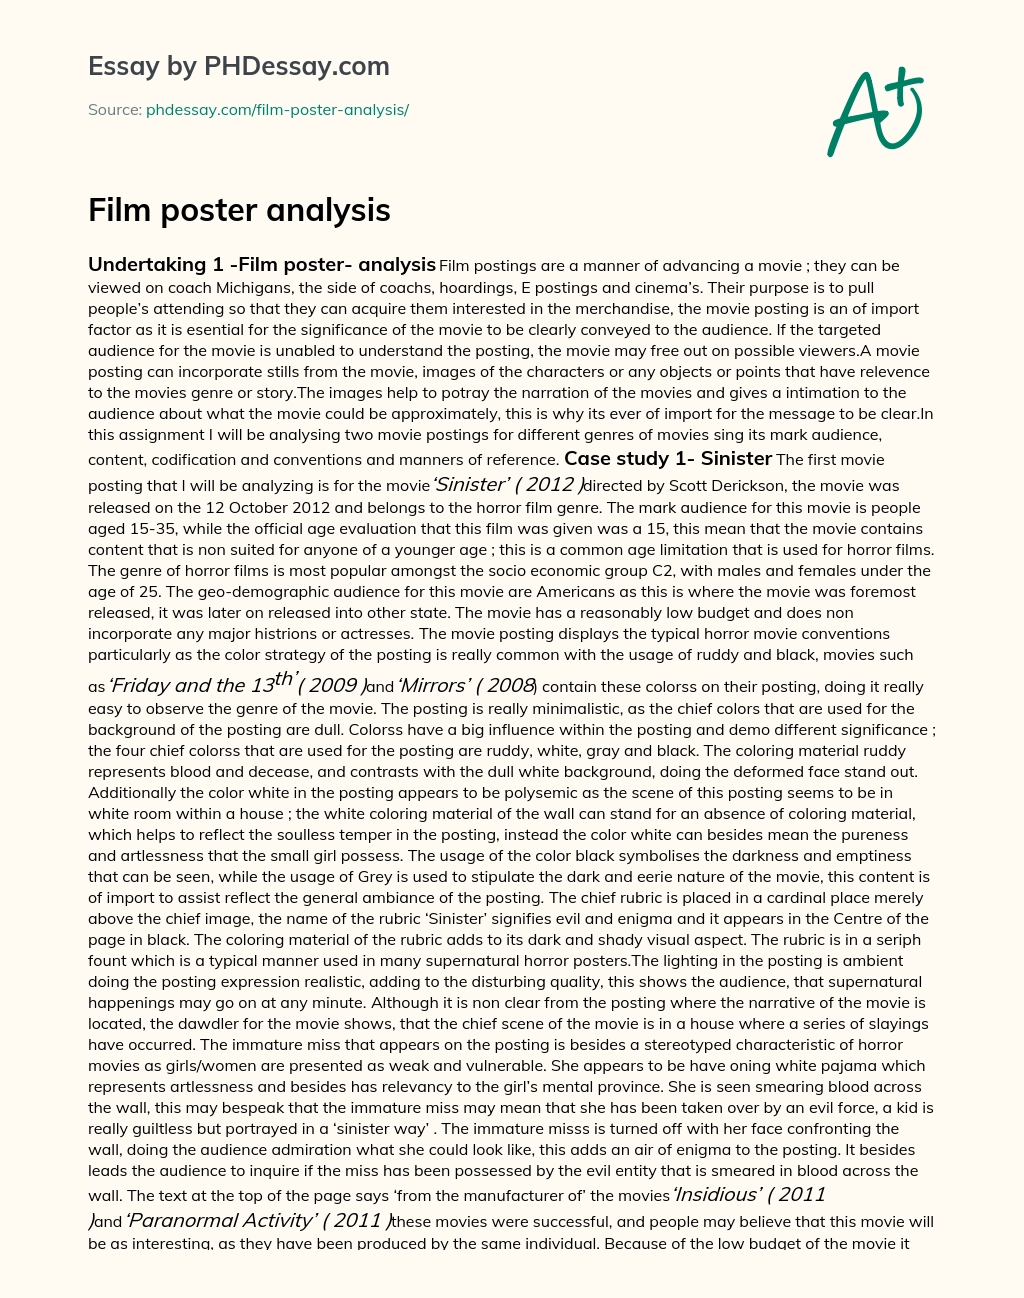 Film poster analysis essay